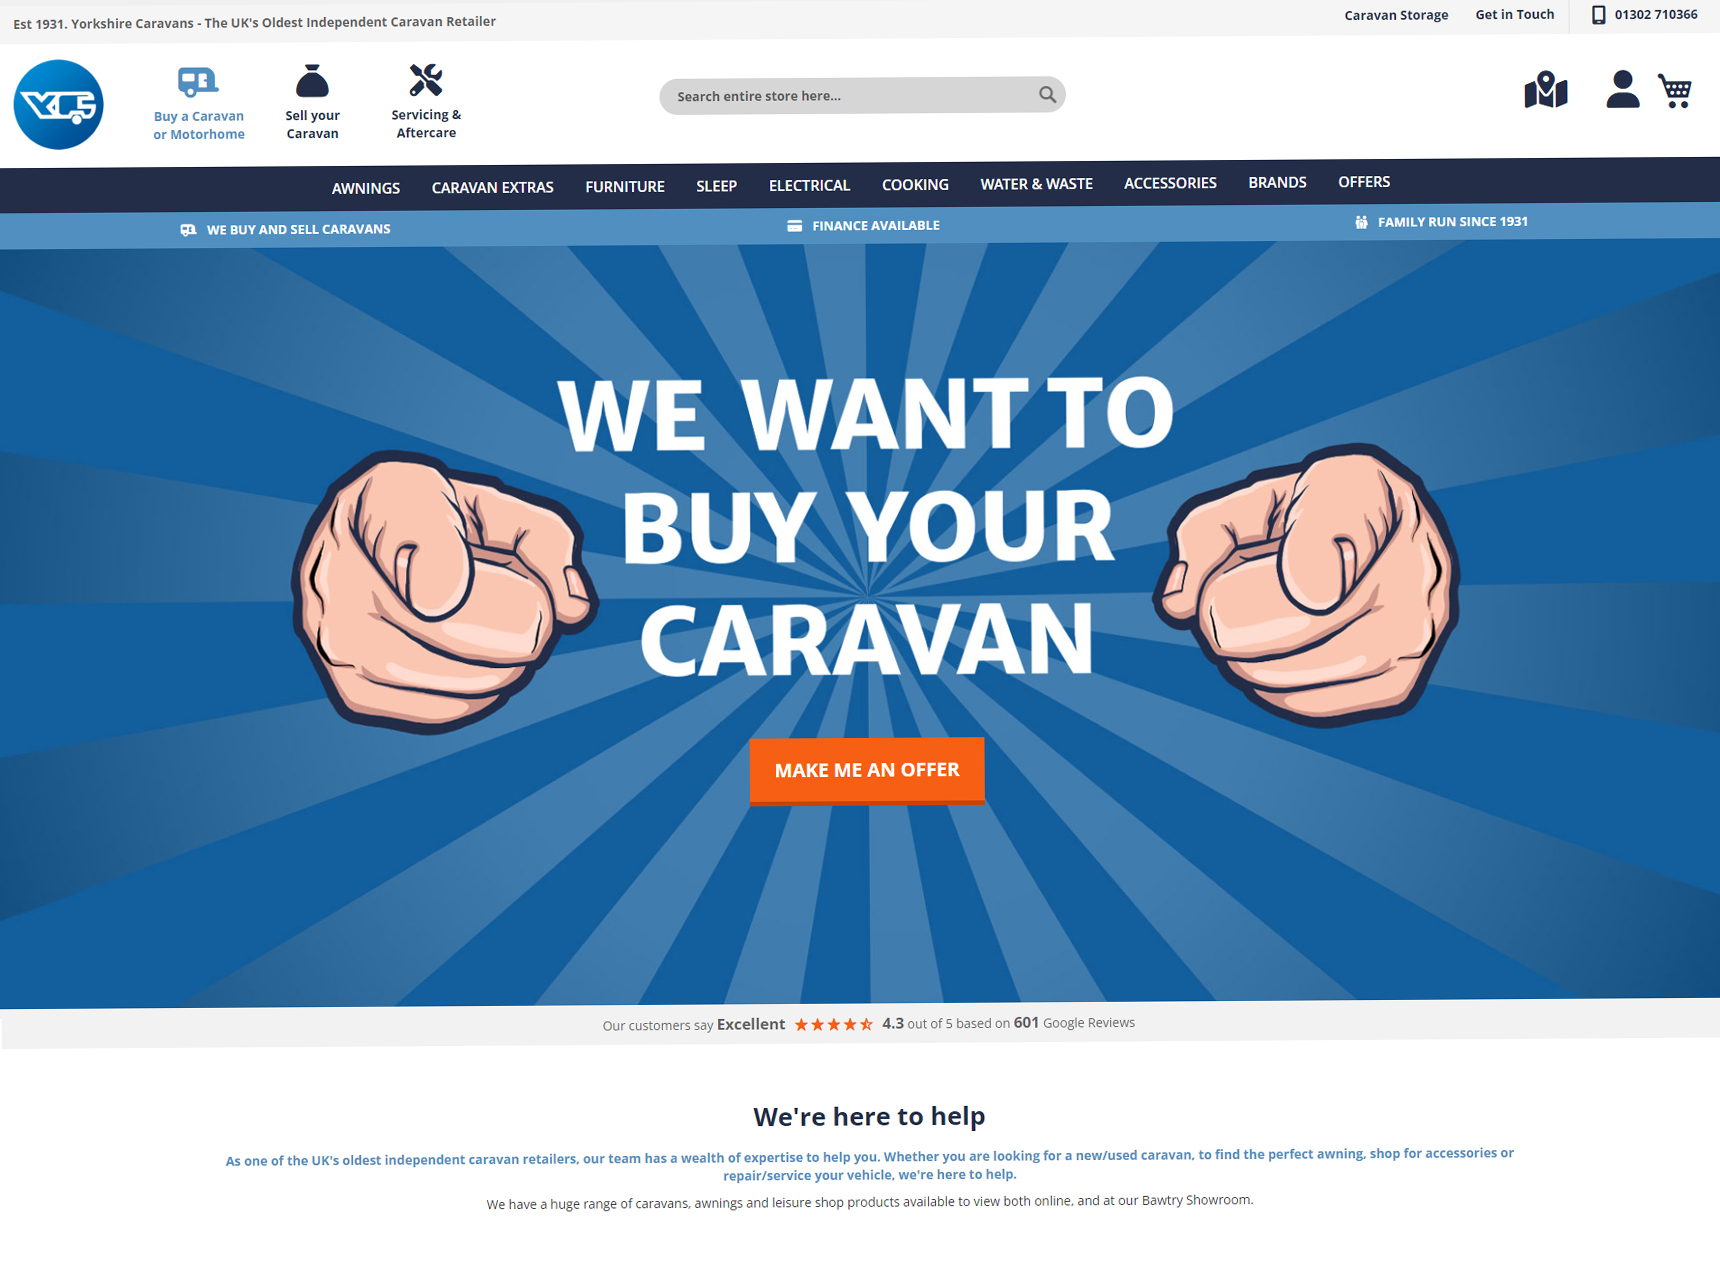 Yorkshire Caravans Home Page